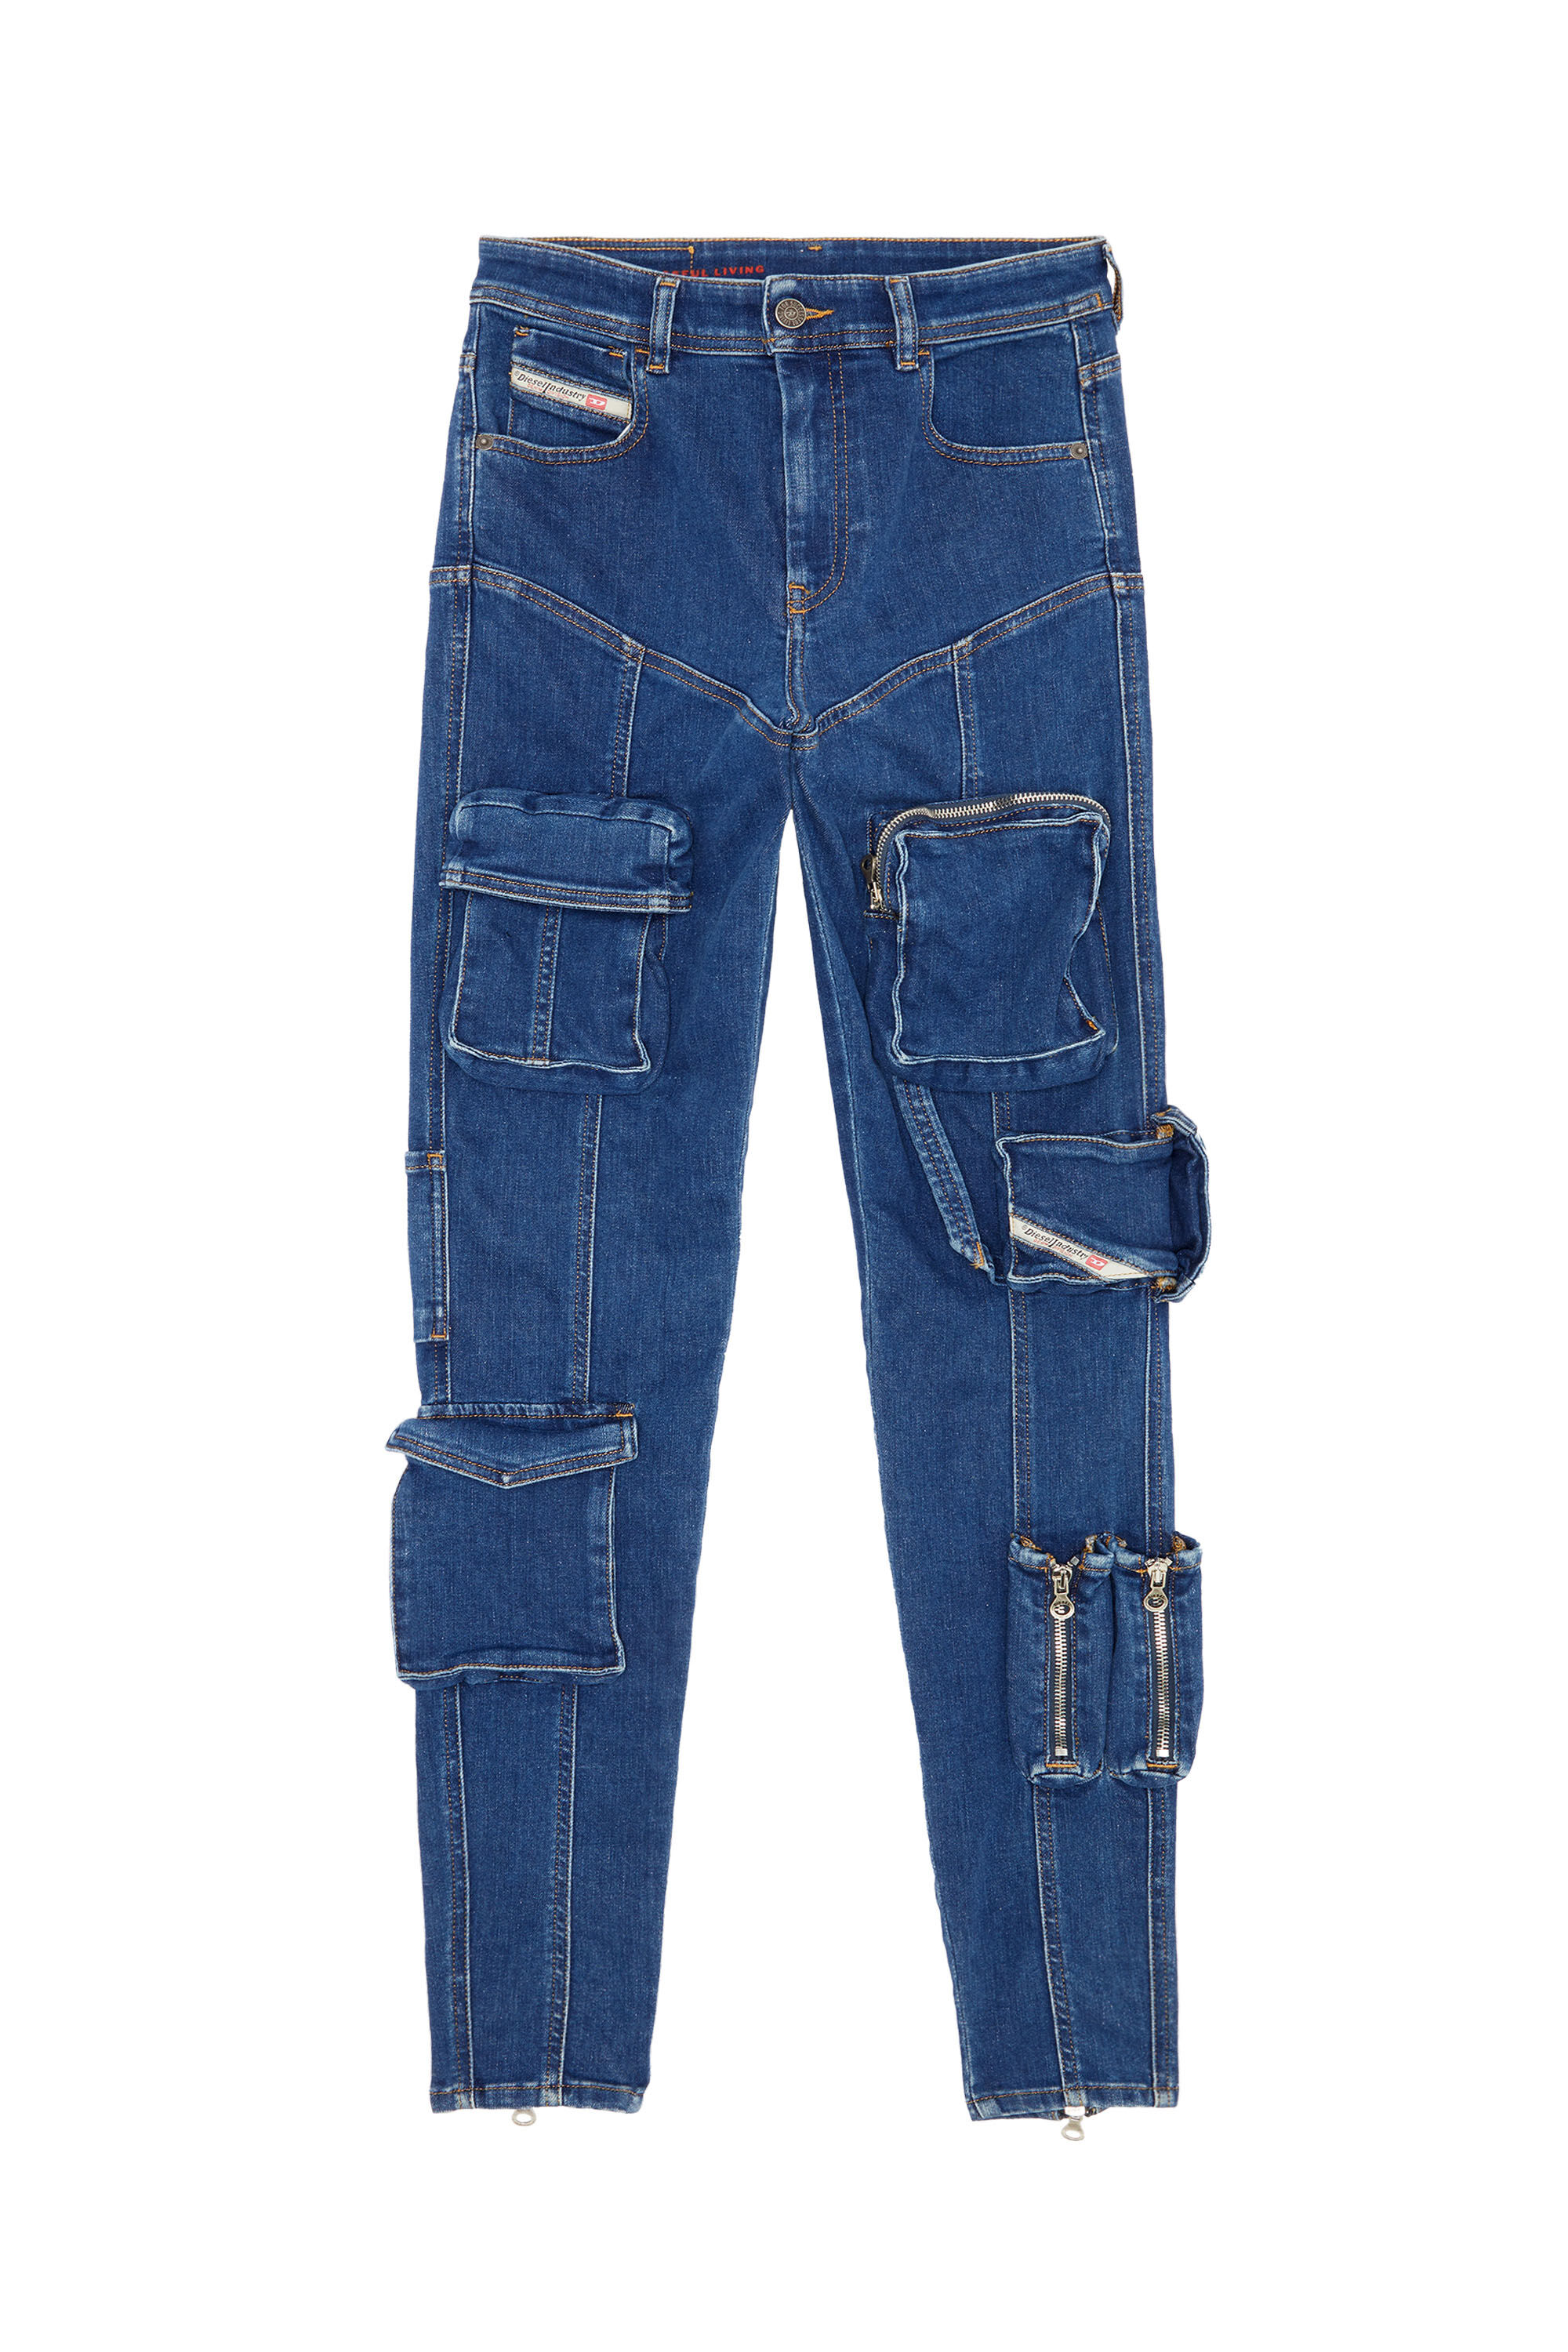 Super skinny Jeans 1984 Slandy-High 09F28